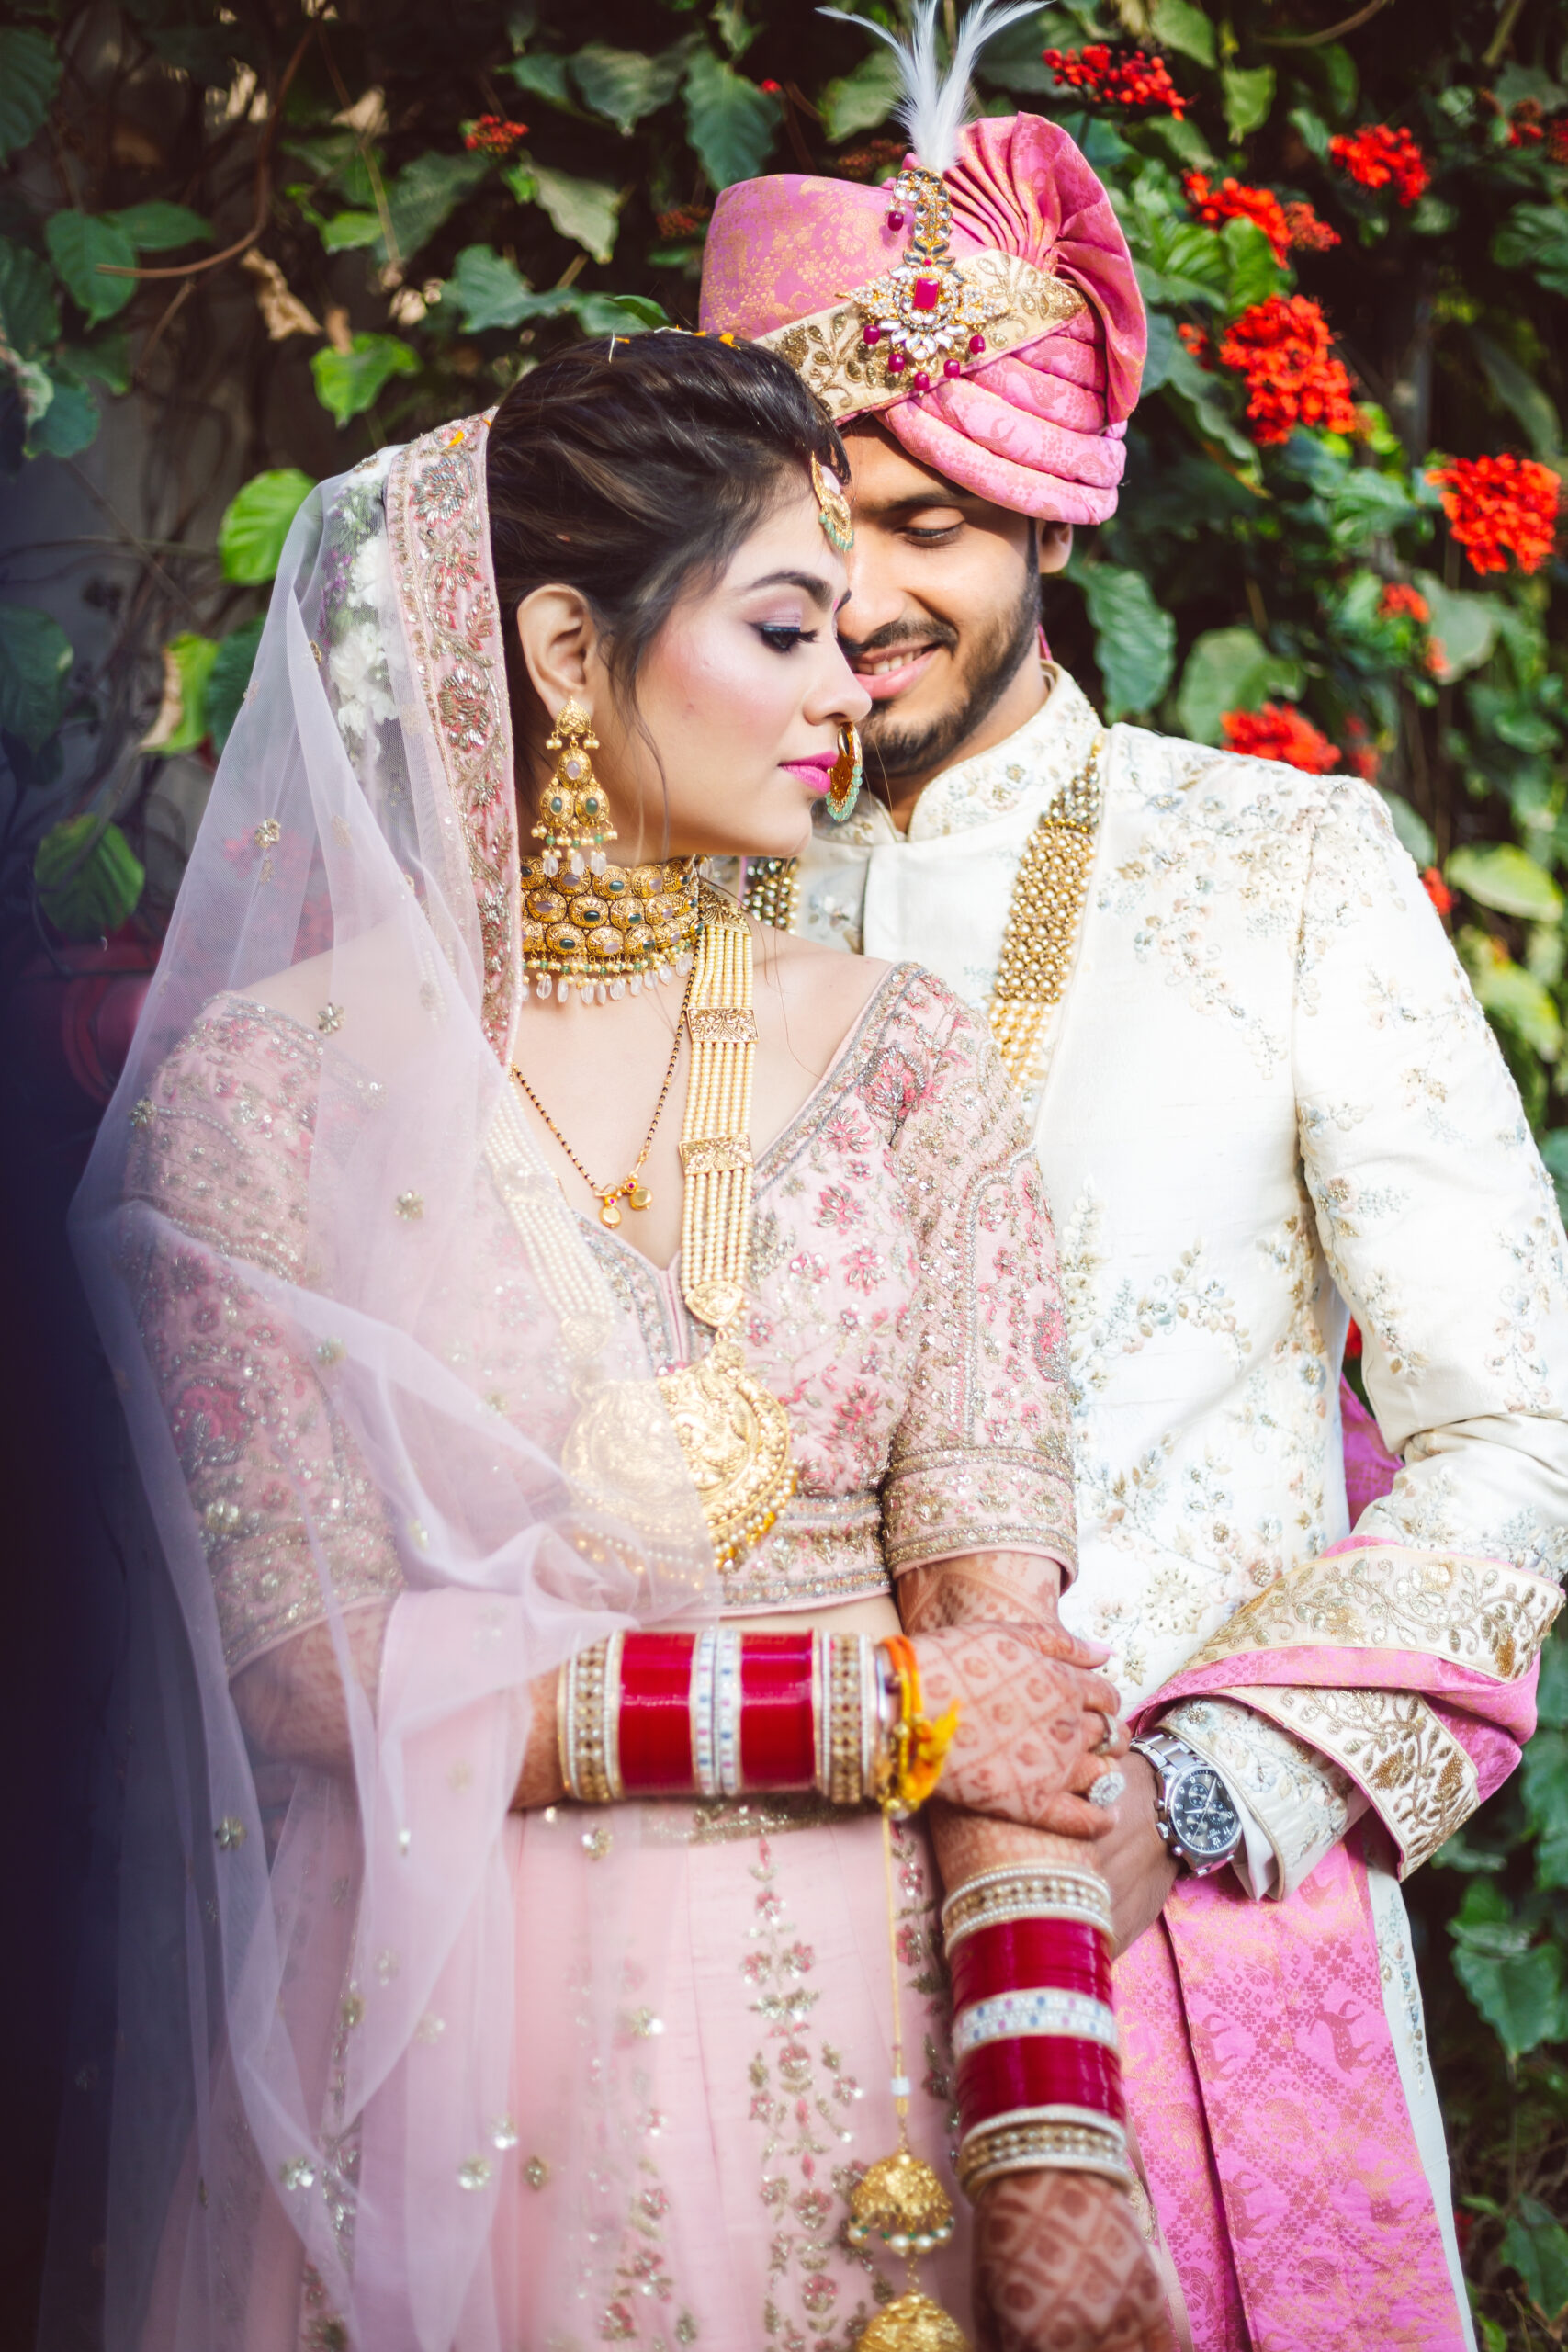 Unique Wedding + Engagement Photography | Indian wedding photography poses,  Indian bride photography poses, Indian wedding photography couples